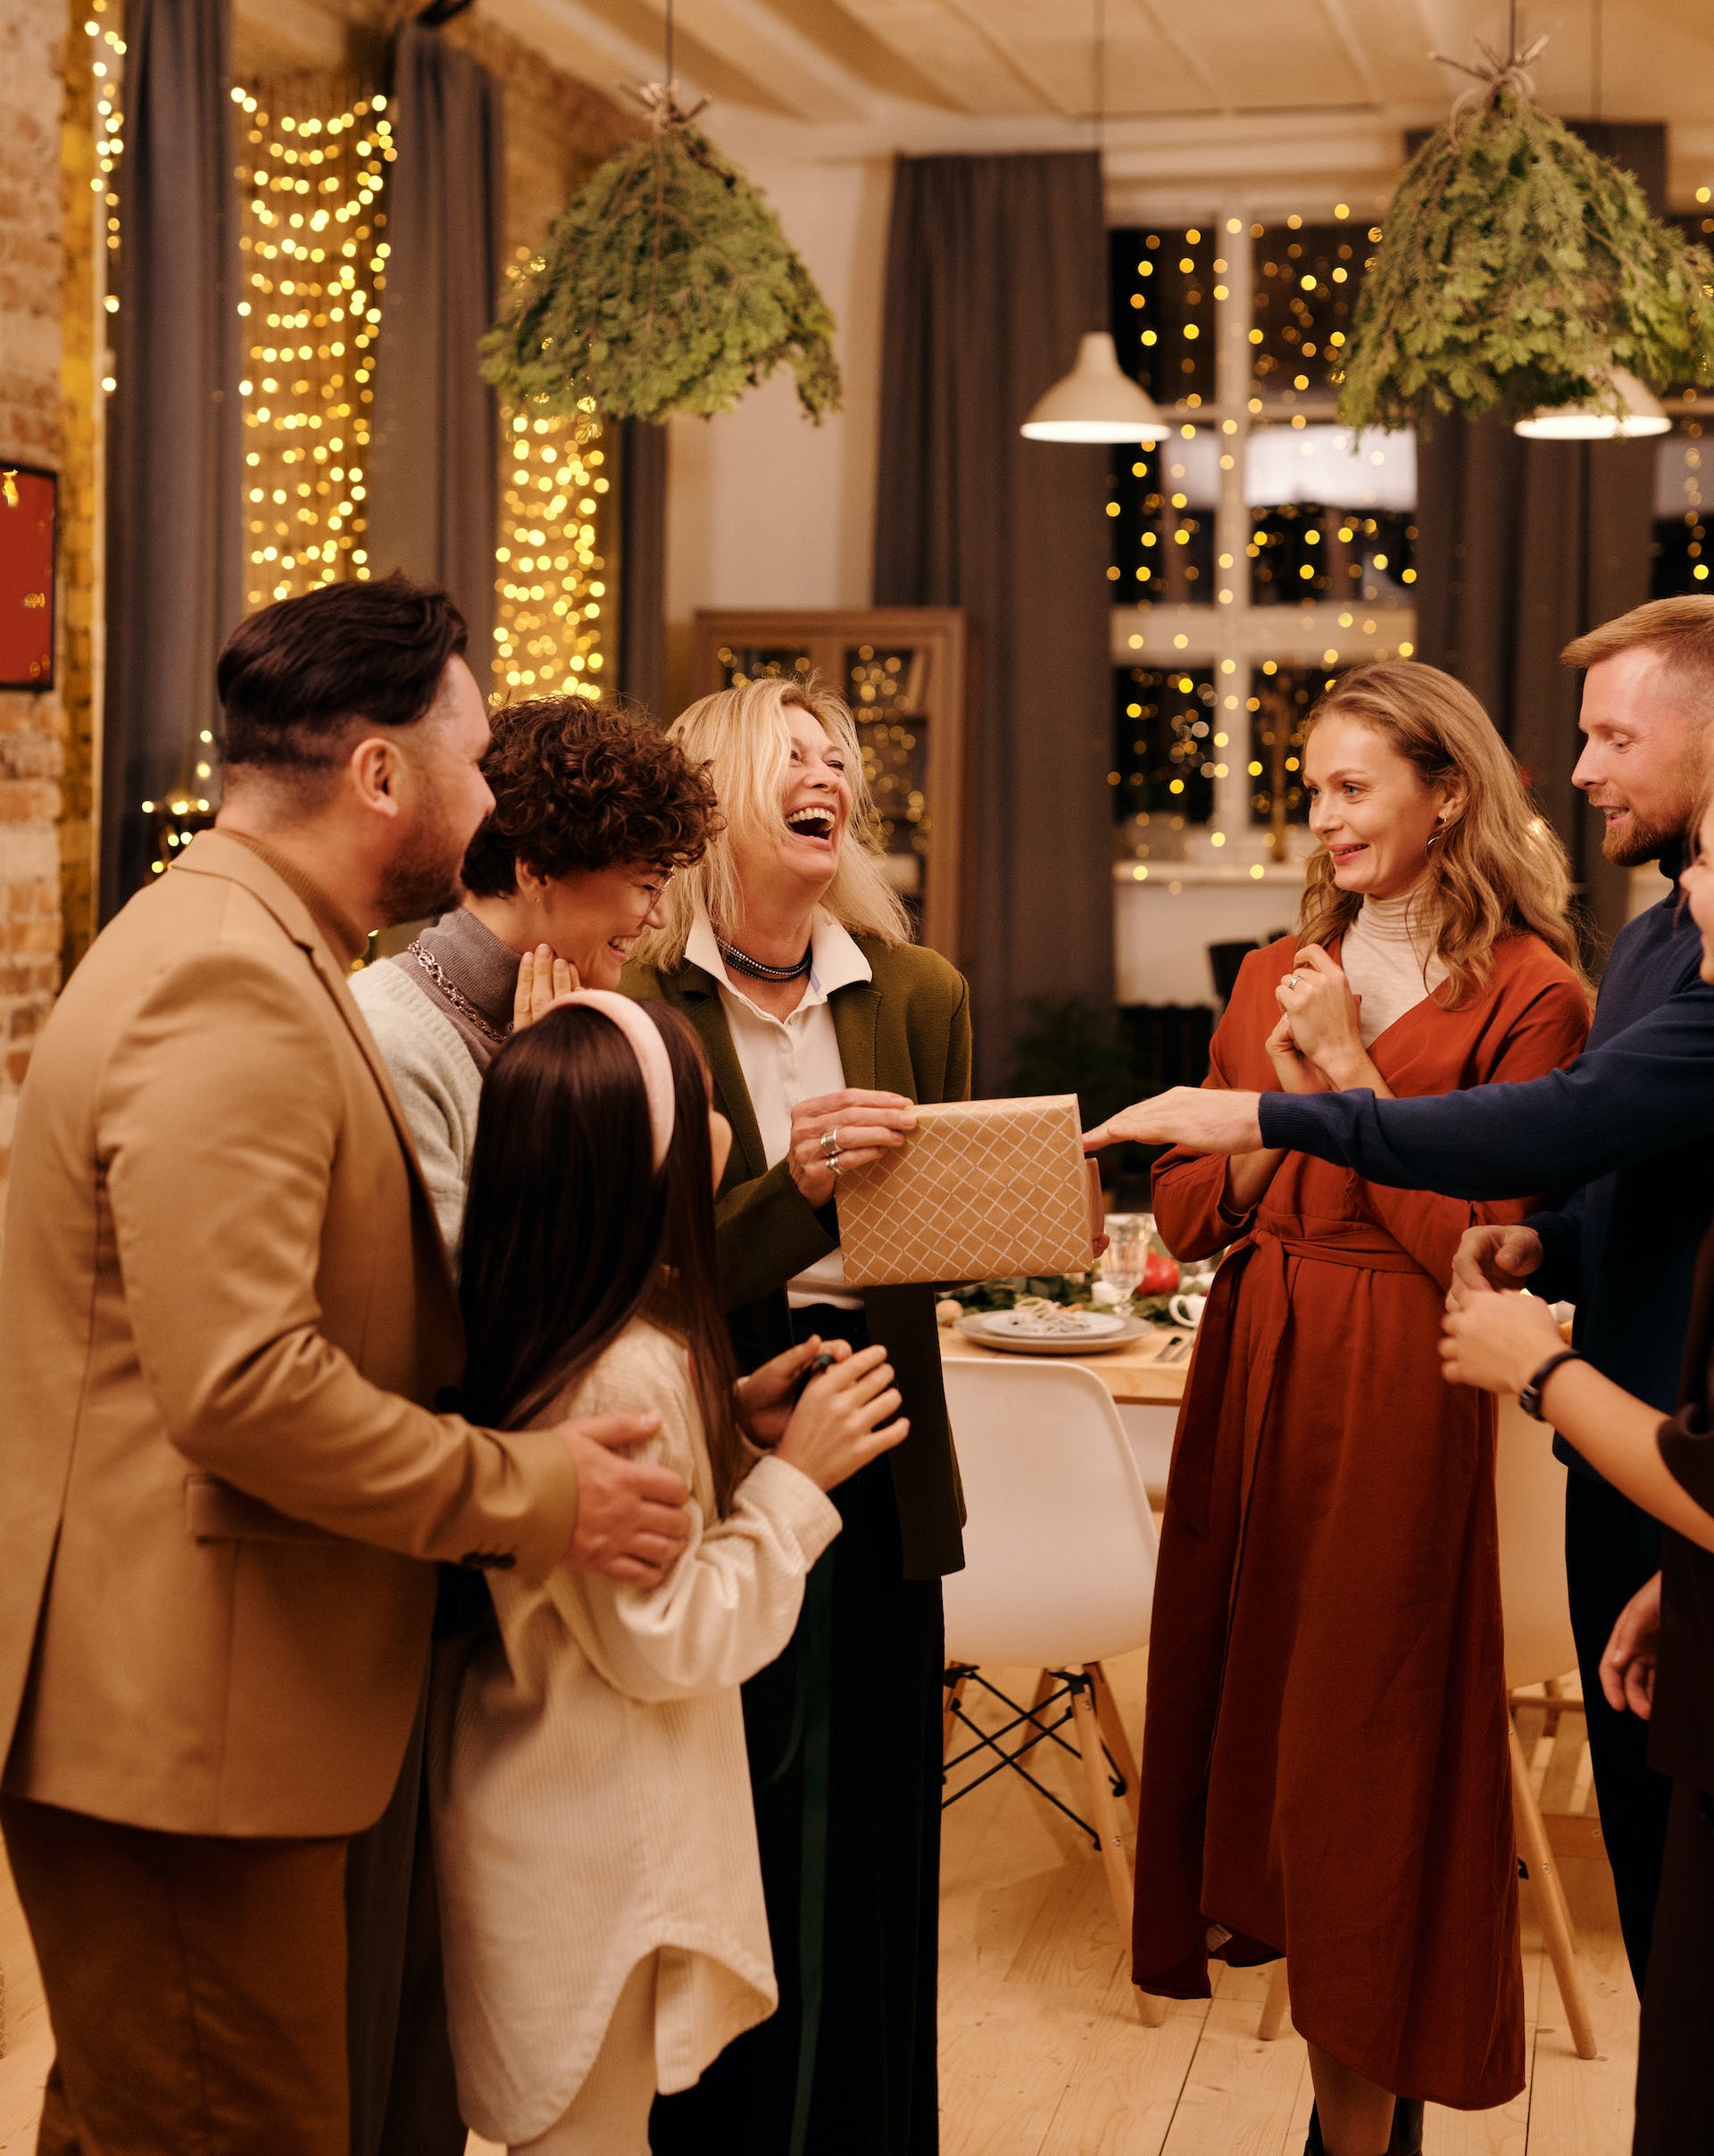 Family members having fun at a Christmas gathering | Source: Pexels